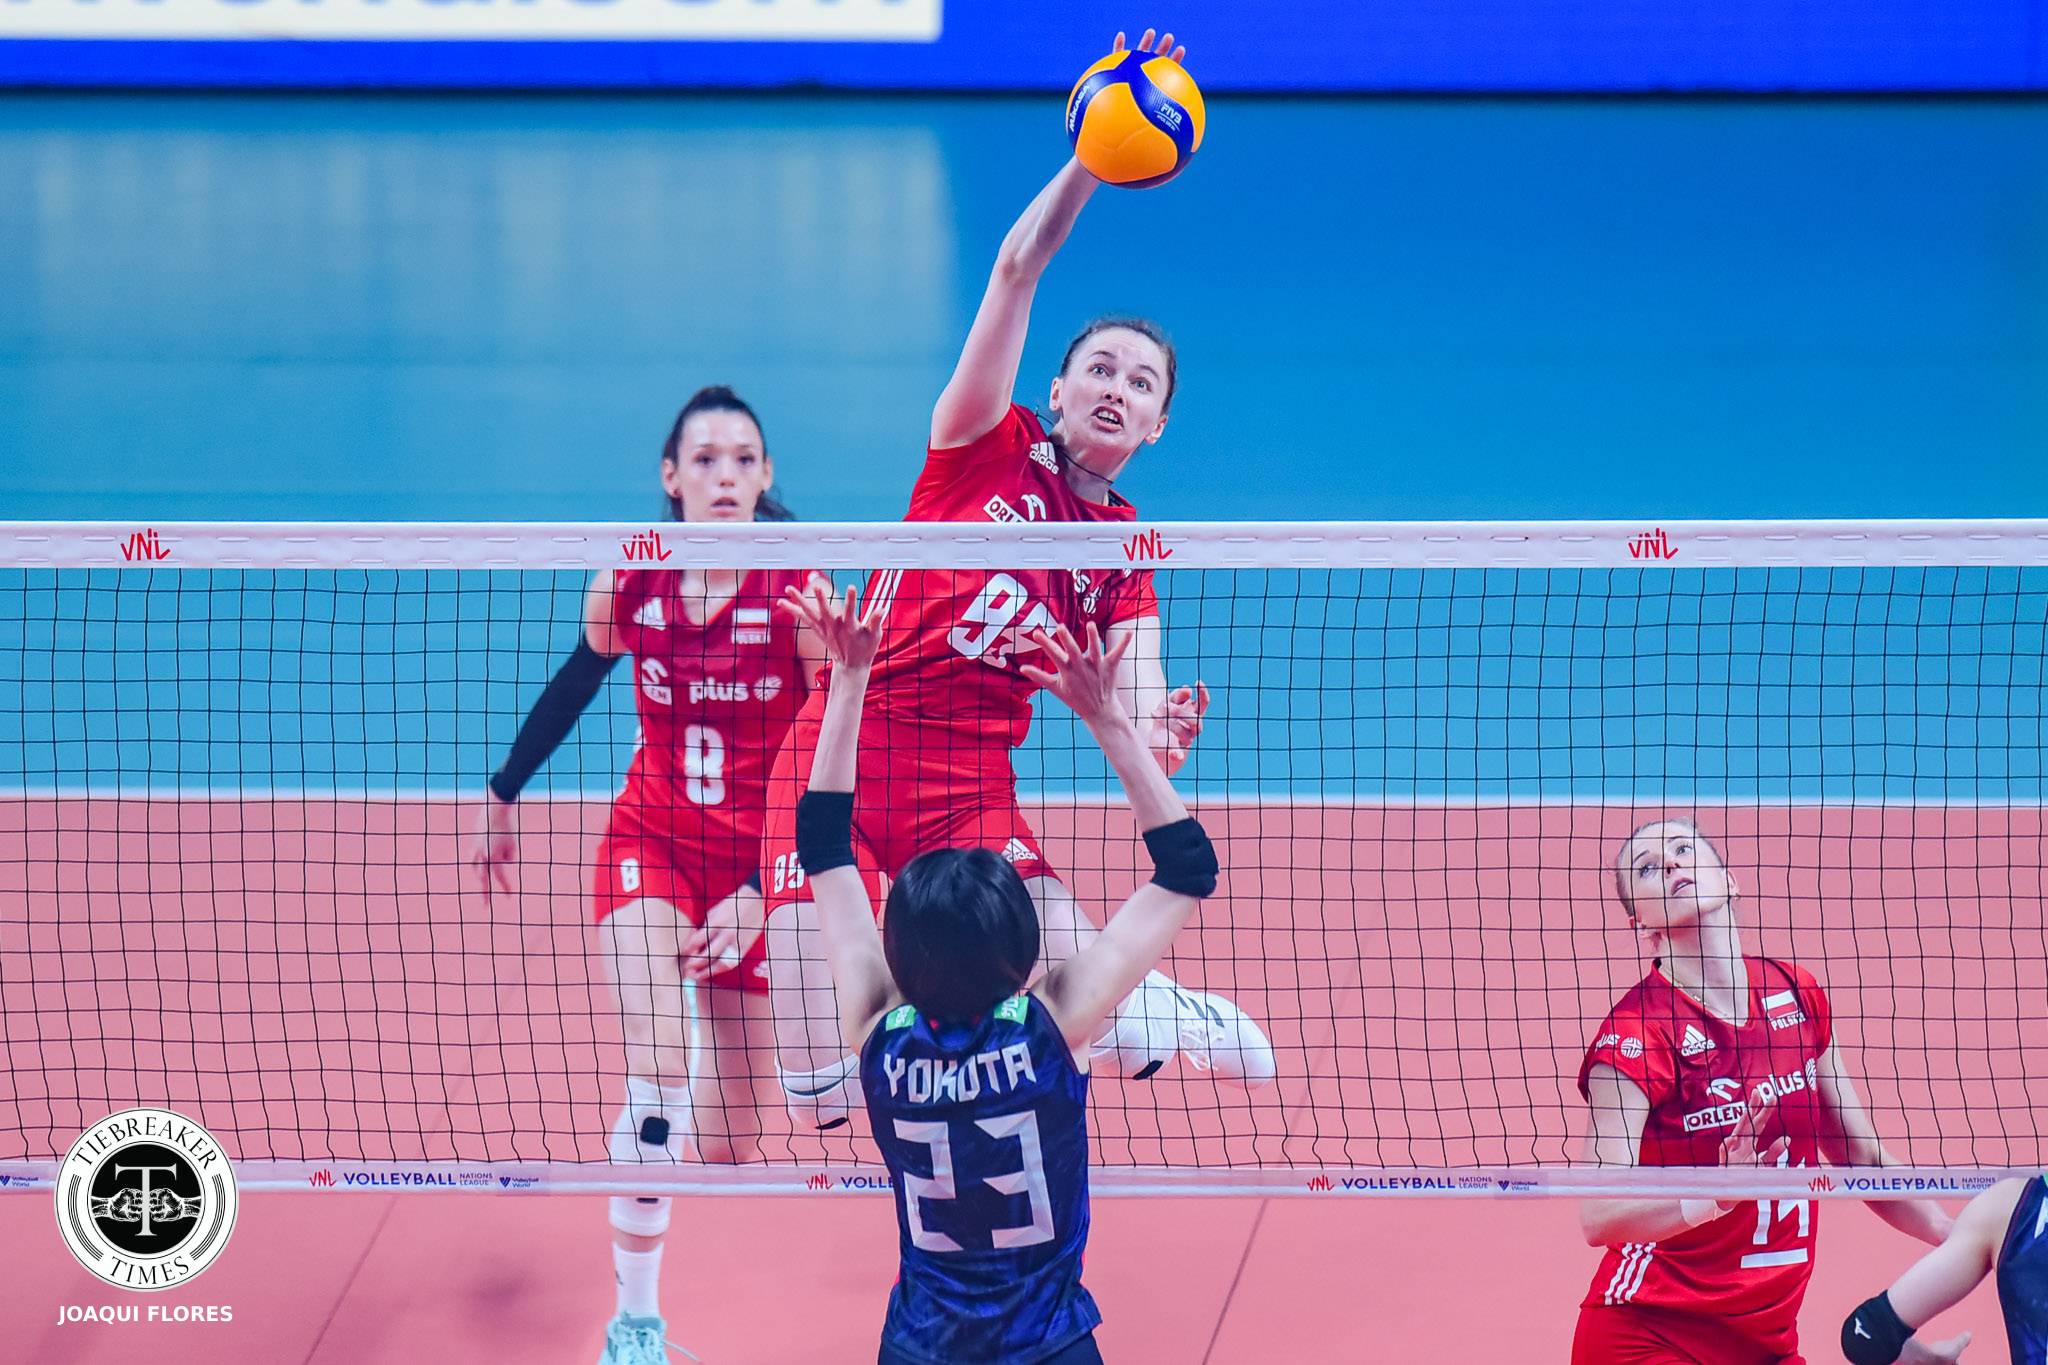 VNL-2022-Japan-vs.-Poland-Magdalena-Jurczyk-4237-1 VNL: Japan continues dominant run, sweeps Poland to go 5-0 2022 VNL Season News Volleyball  - philippine sports news